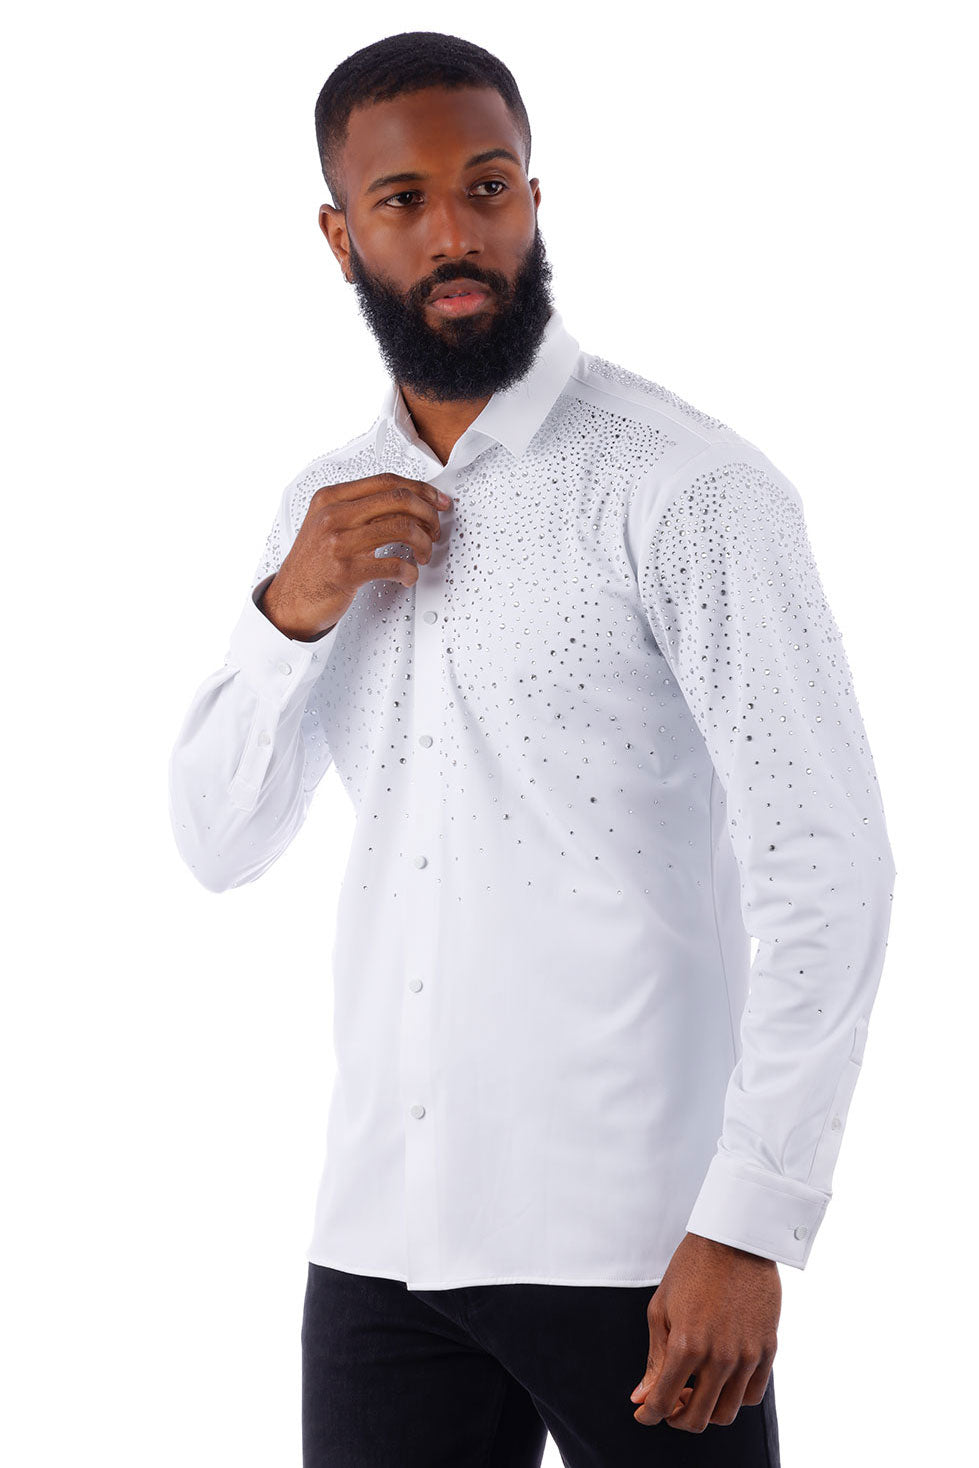 BARABAS Men's Rhinestones Jewels Long Sleeve Shirt 4B06 White SIlver